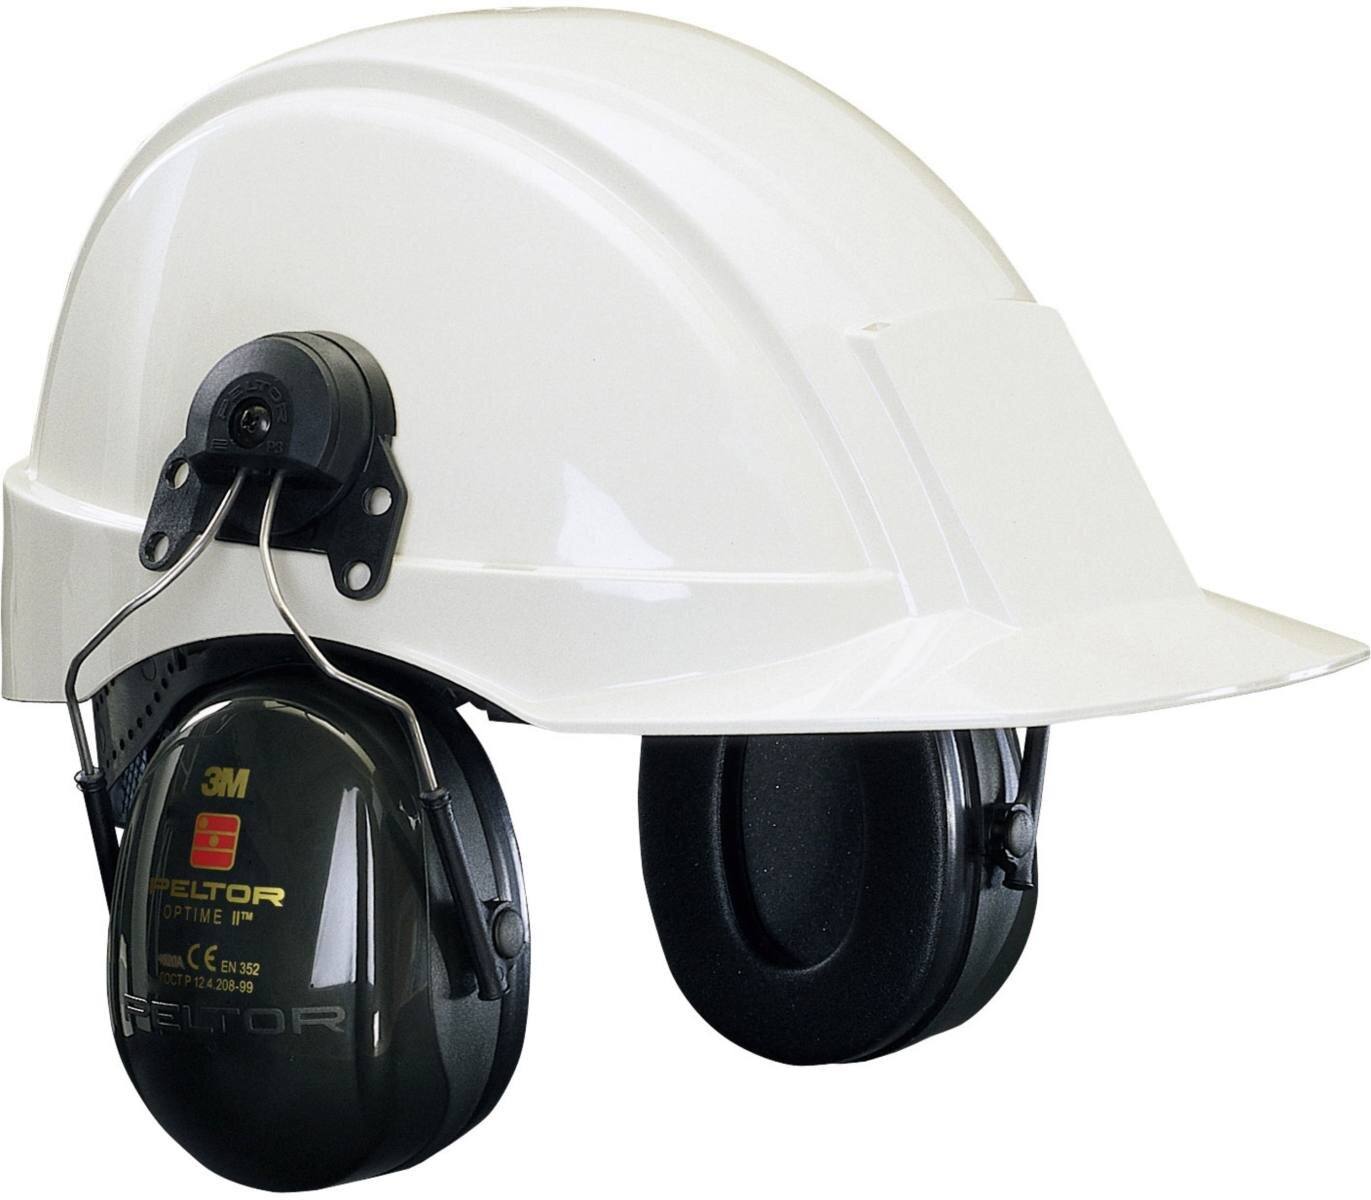 Cuffie auricolari 3M Peltor Optime II, attacco per casco, verde, con adattatore per casco P3E (per tutti i caschi 3M, tranne G2000), SNR = 30 dB, H520P3E